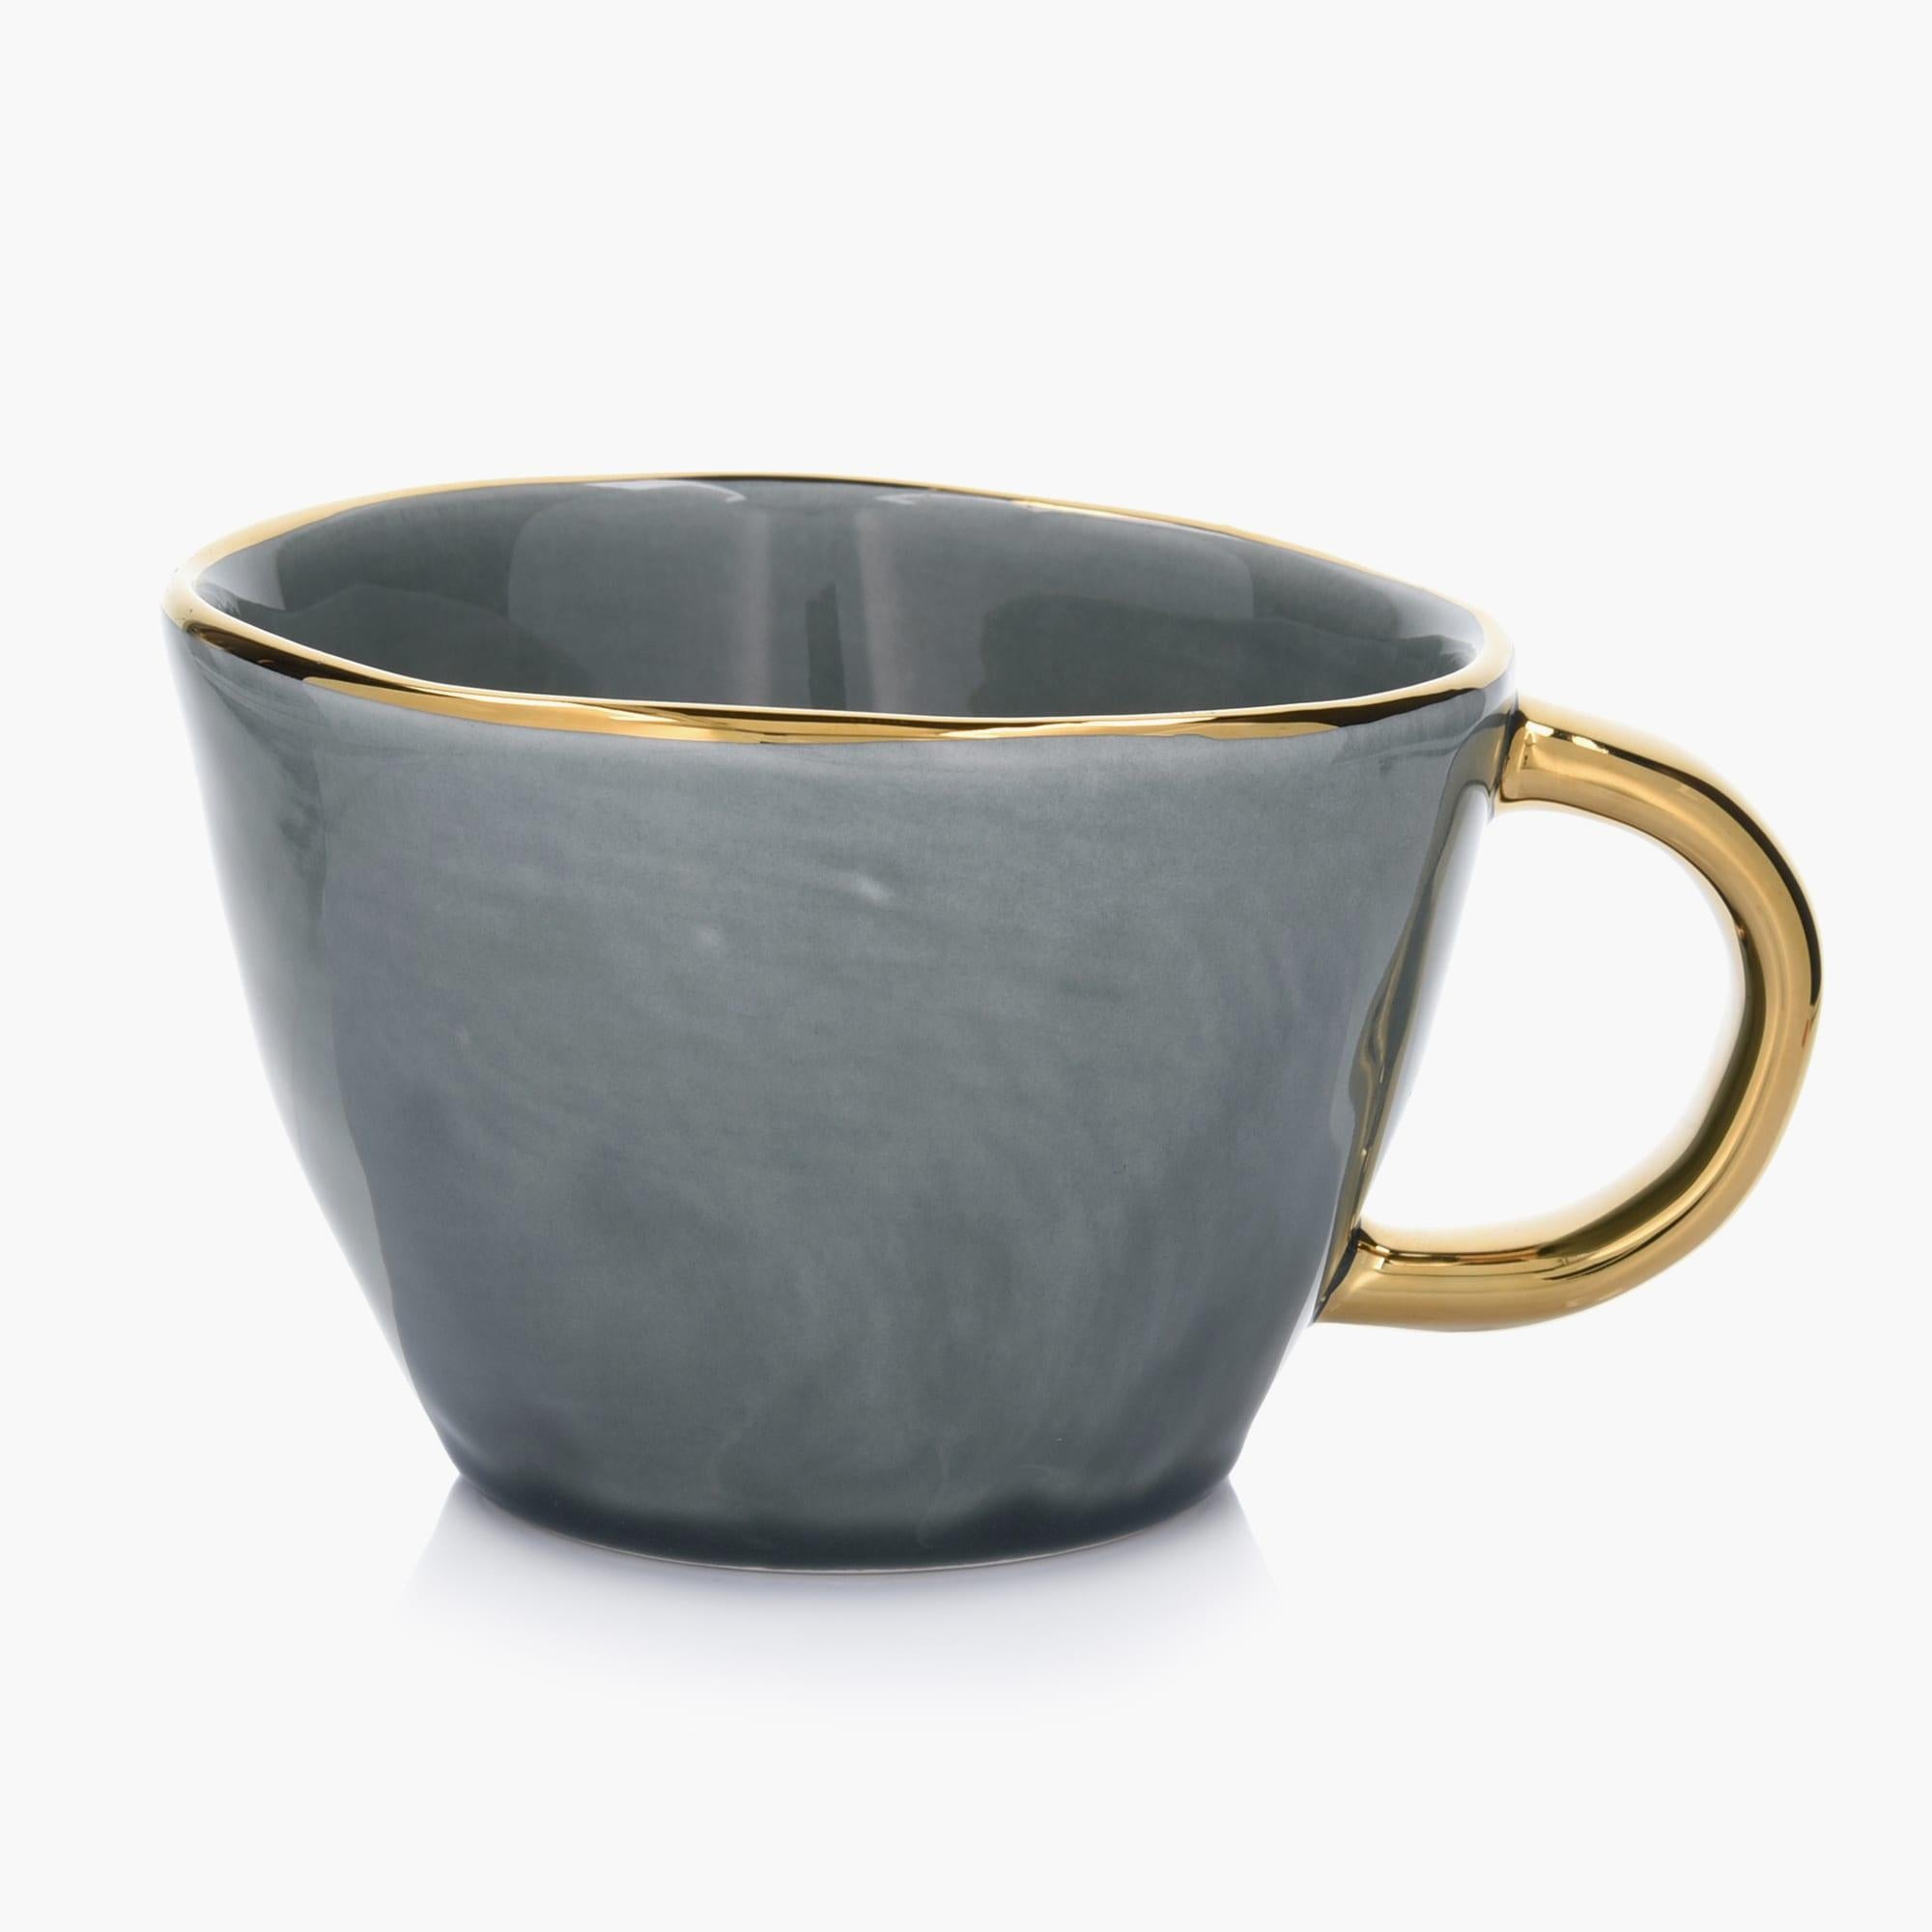 10-OZ Green Stoneware Mug with Gold Rim - Set of Four